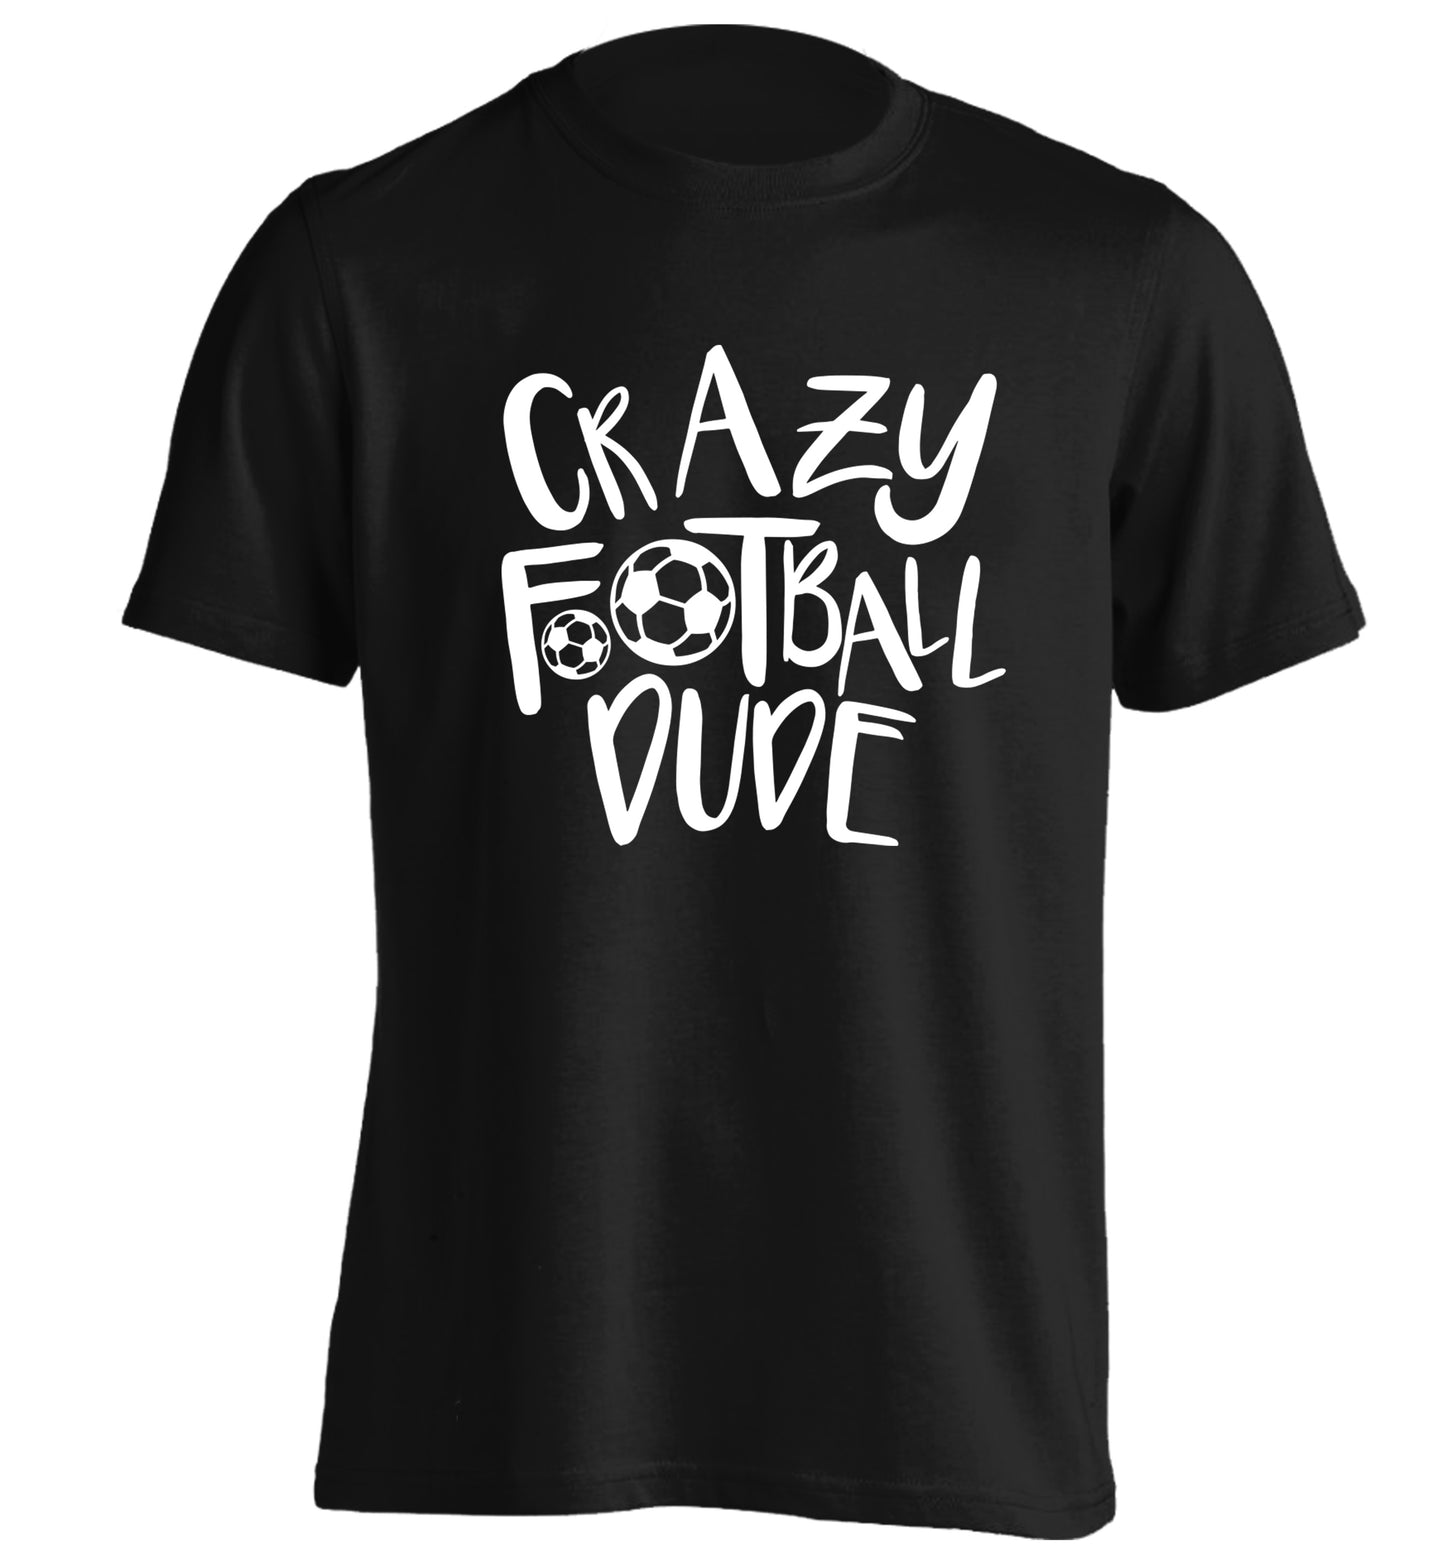 Crazy football dude adults unisexblack Tshirt 2XL